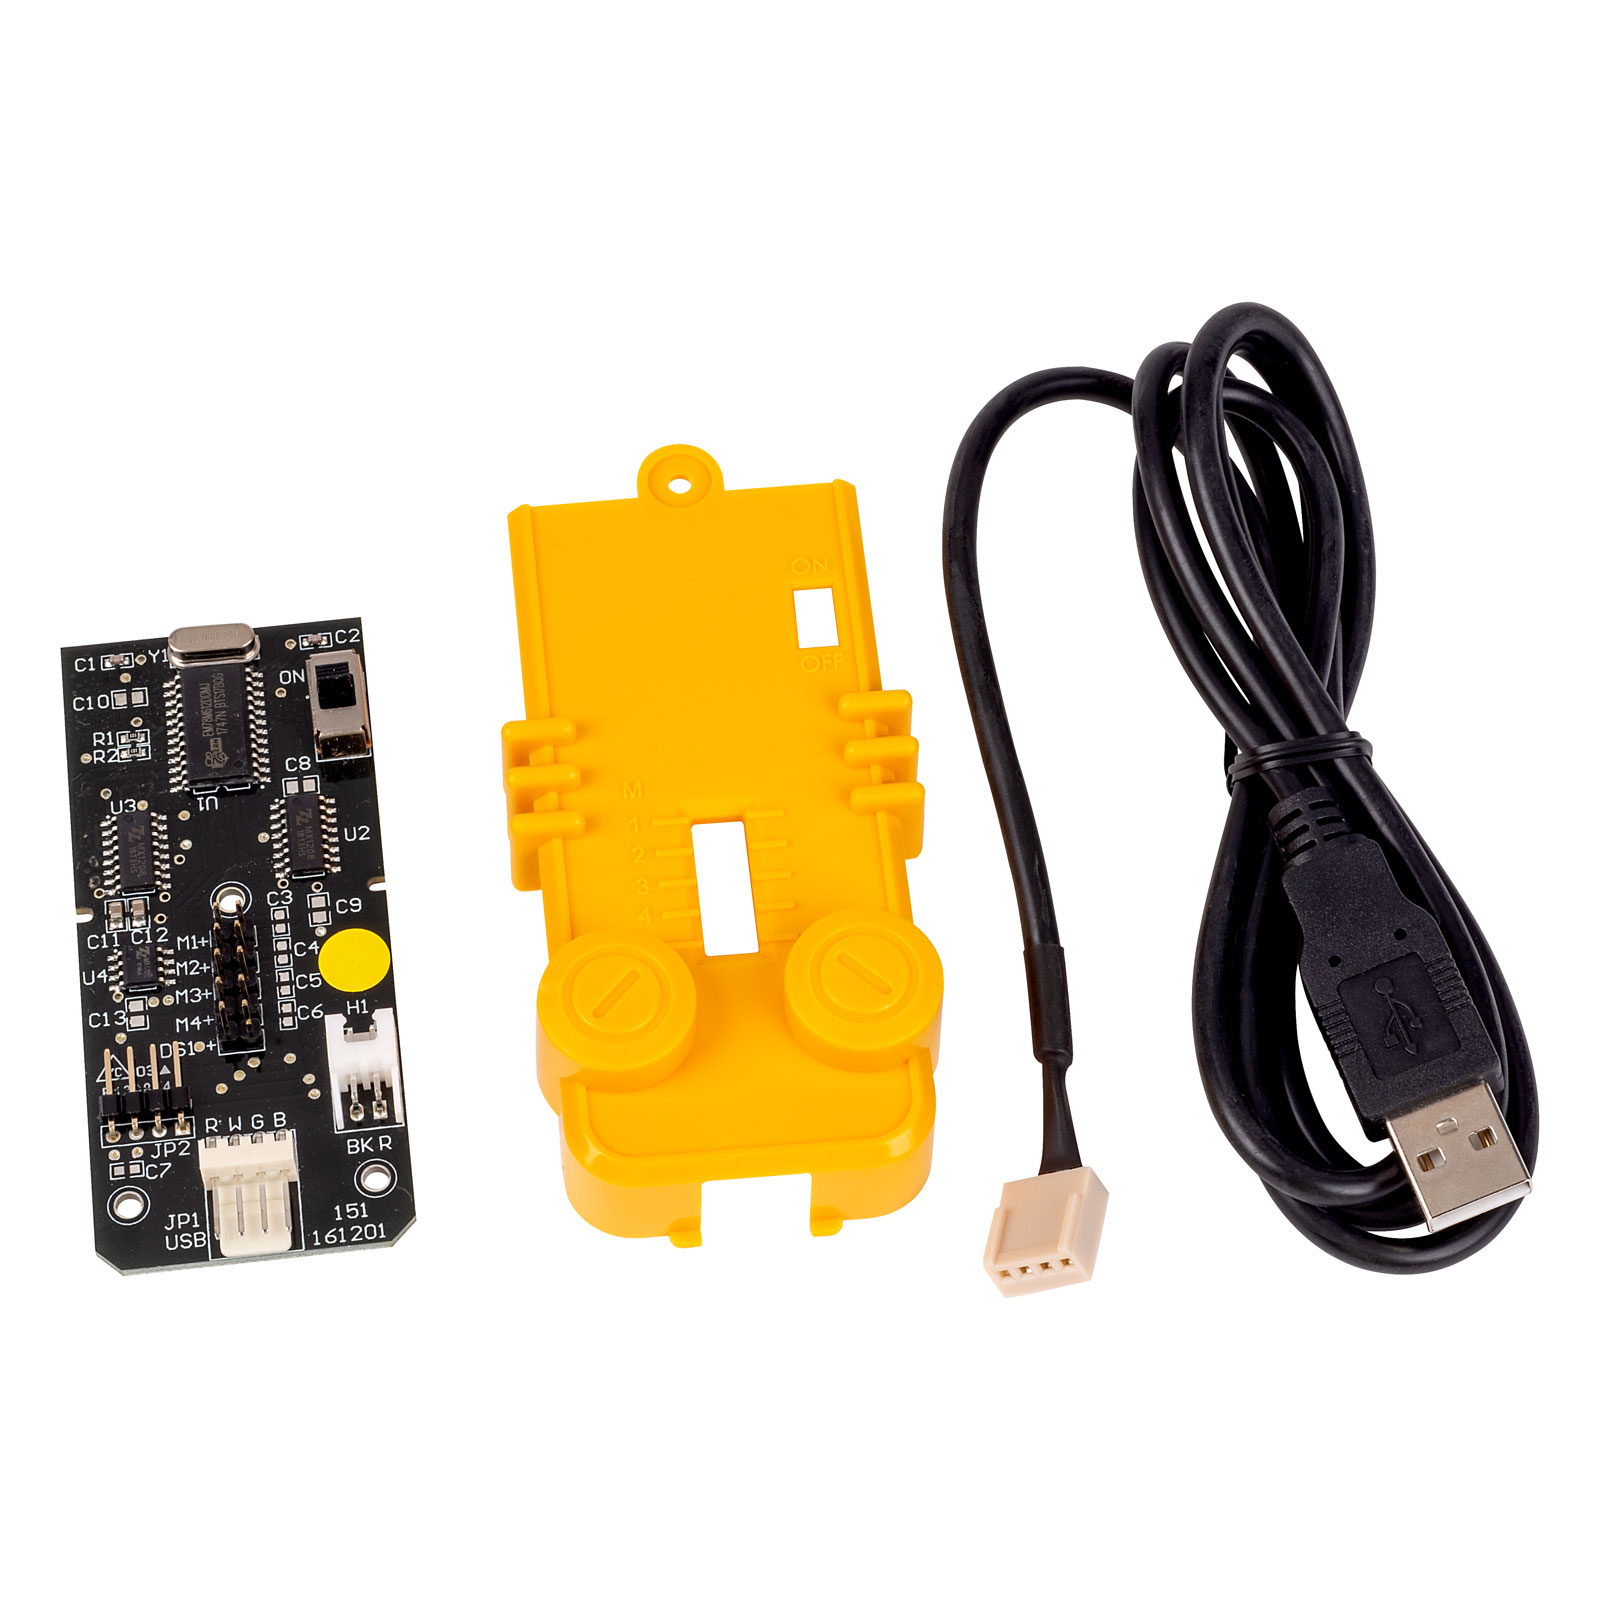 USB Kit for Robotic Arm 06-9349 | Rapid